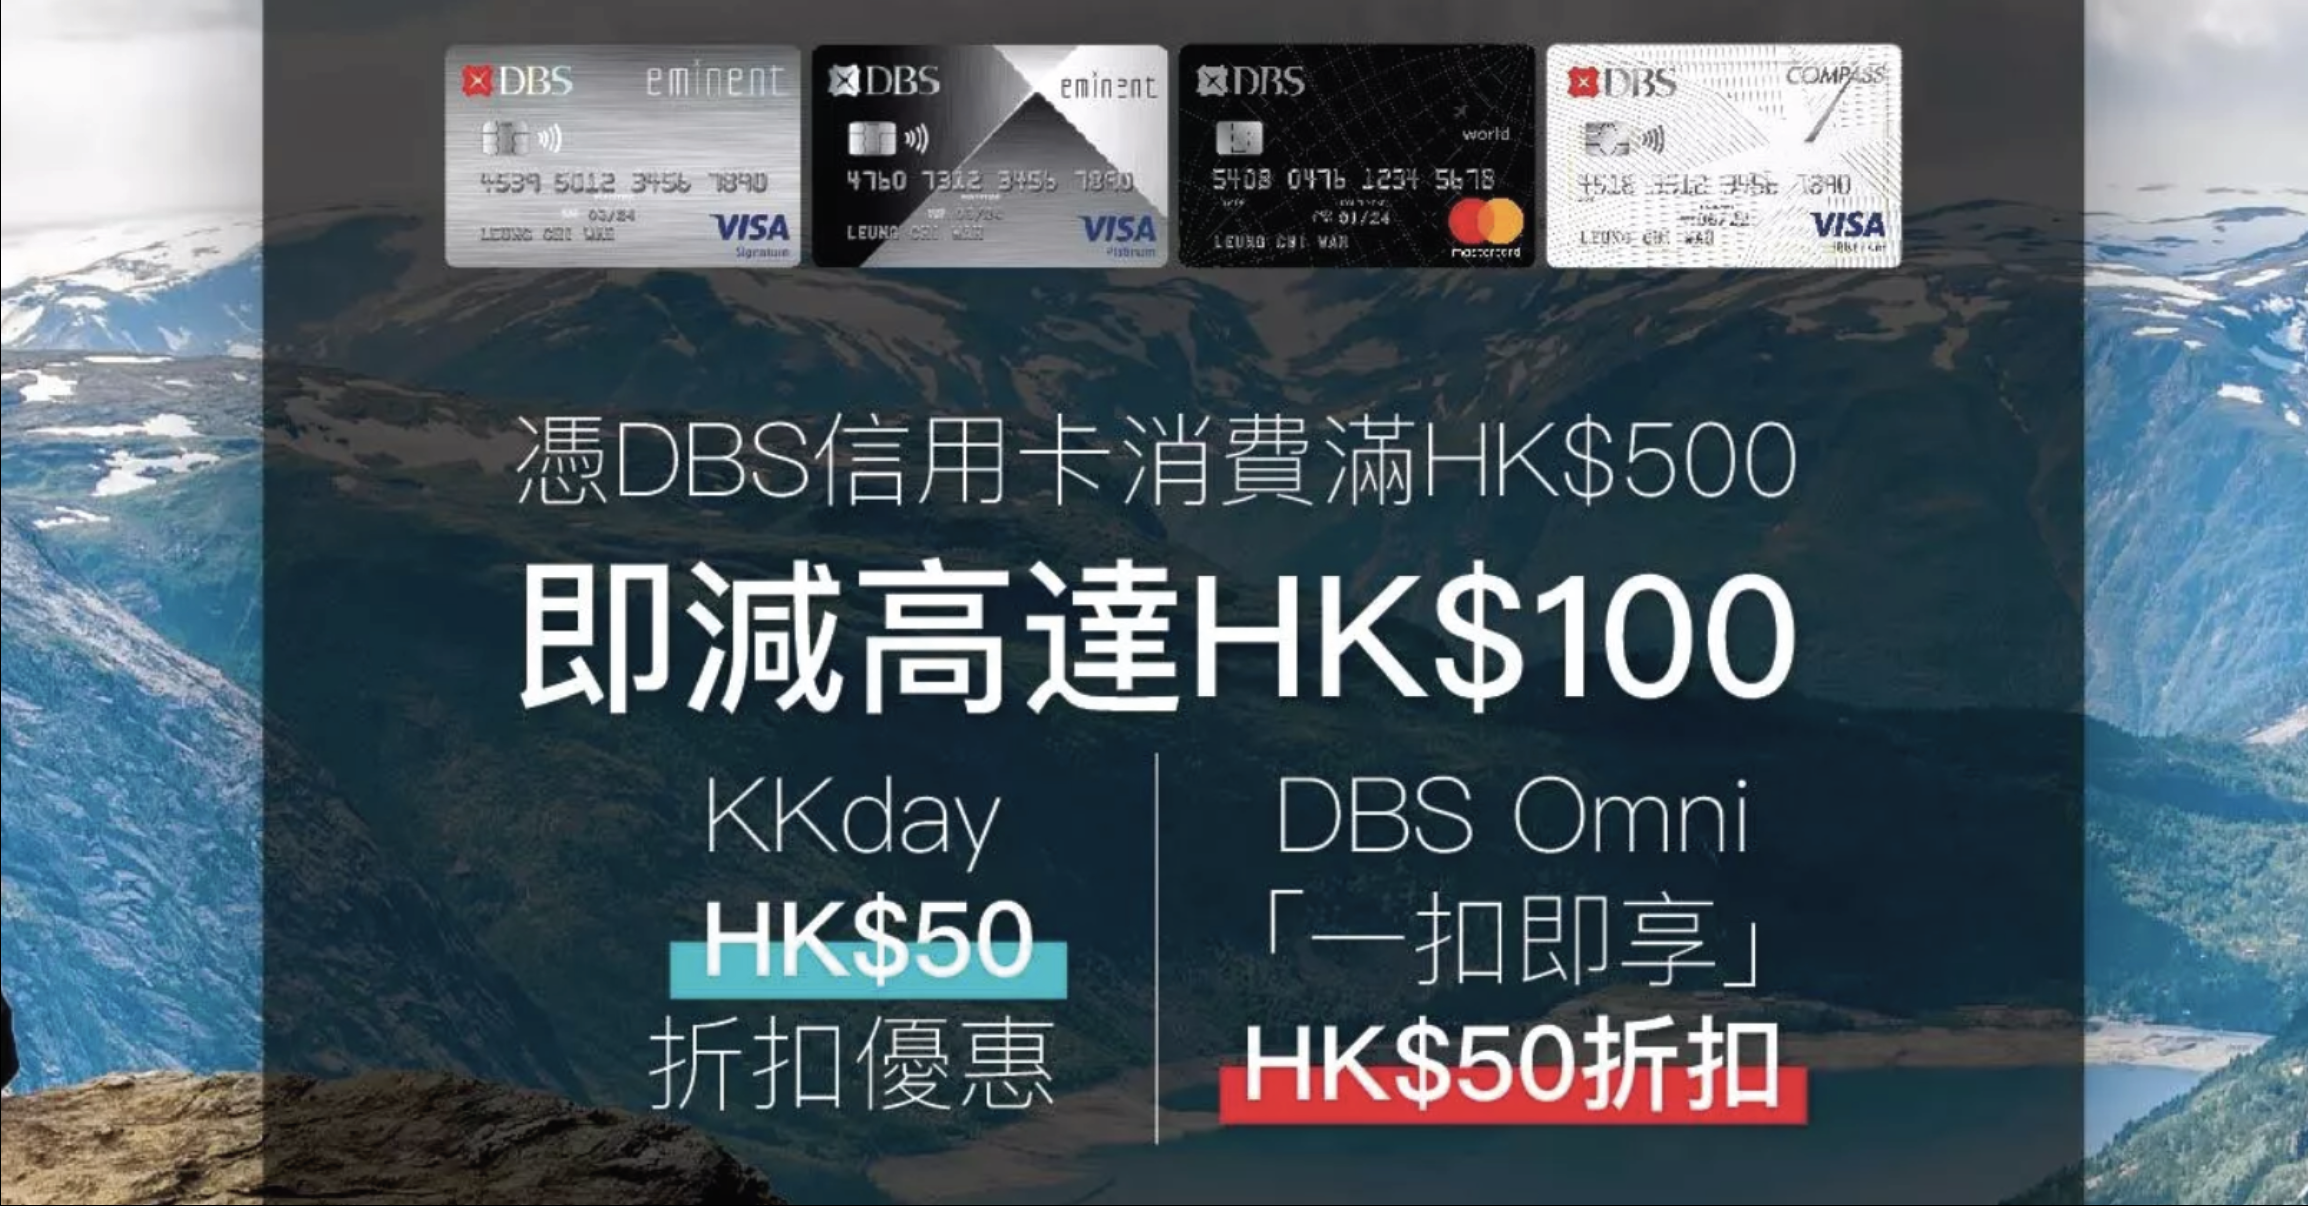 dbs信用卡kkday